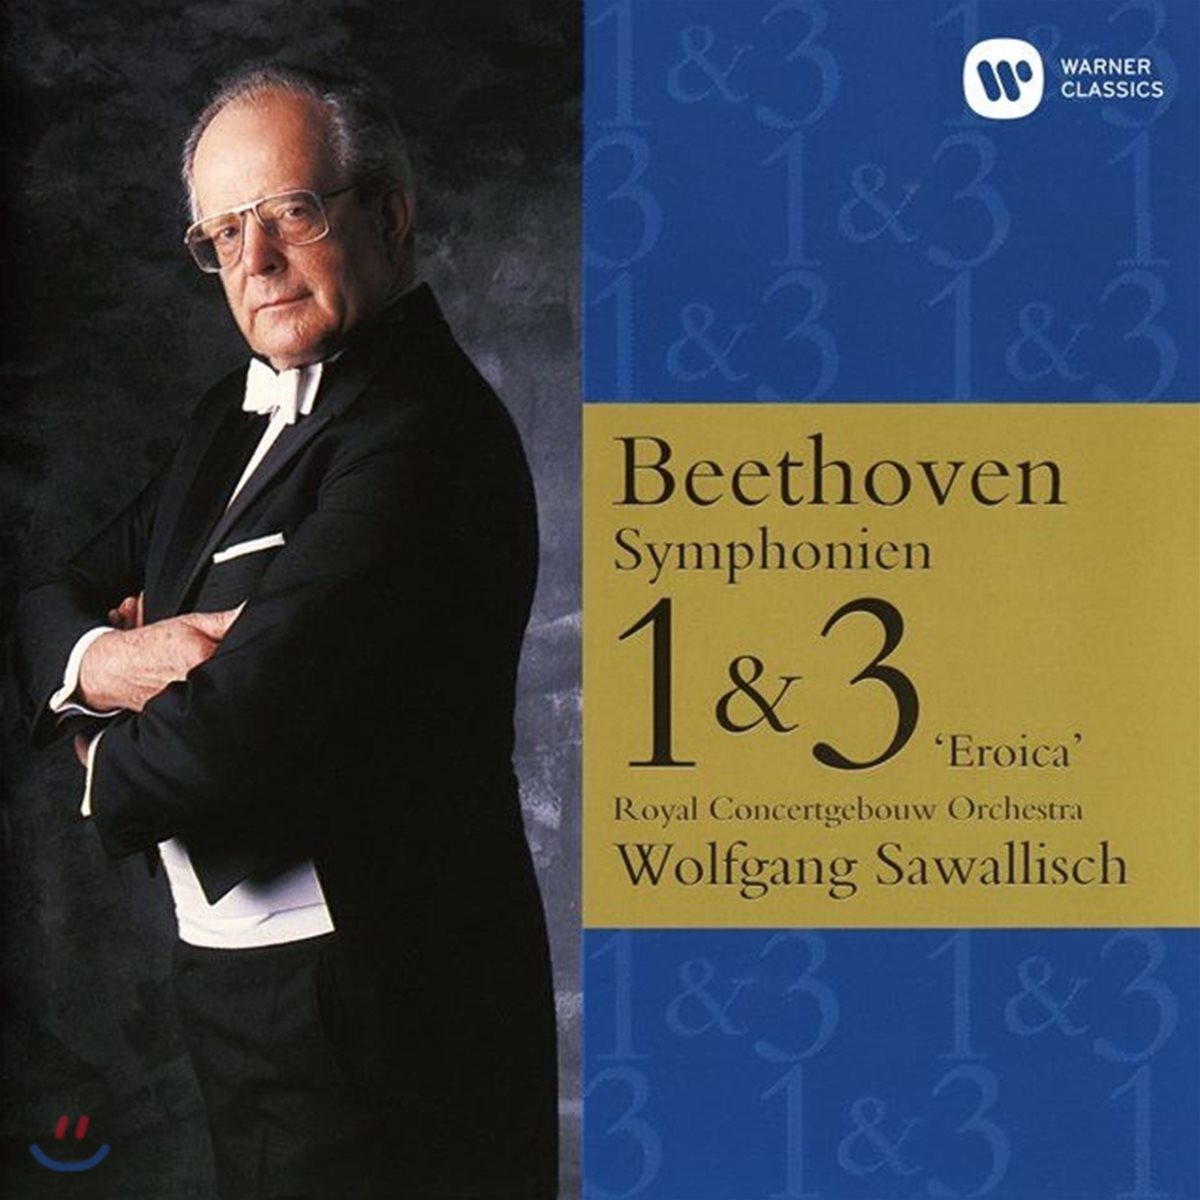 Wolfgang Sawallisch 베토벤: 교향곡 1, 2, 3, 8번 (Beethoven: Symphonies Nos. 1, 2, 3, 8)